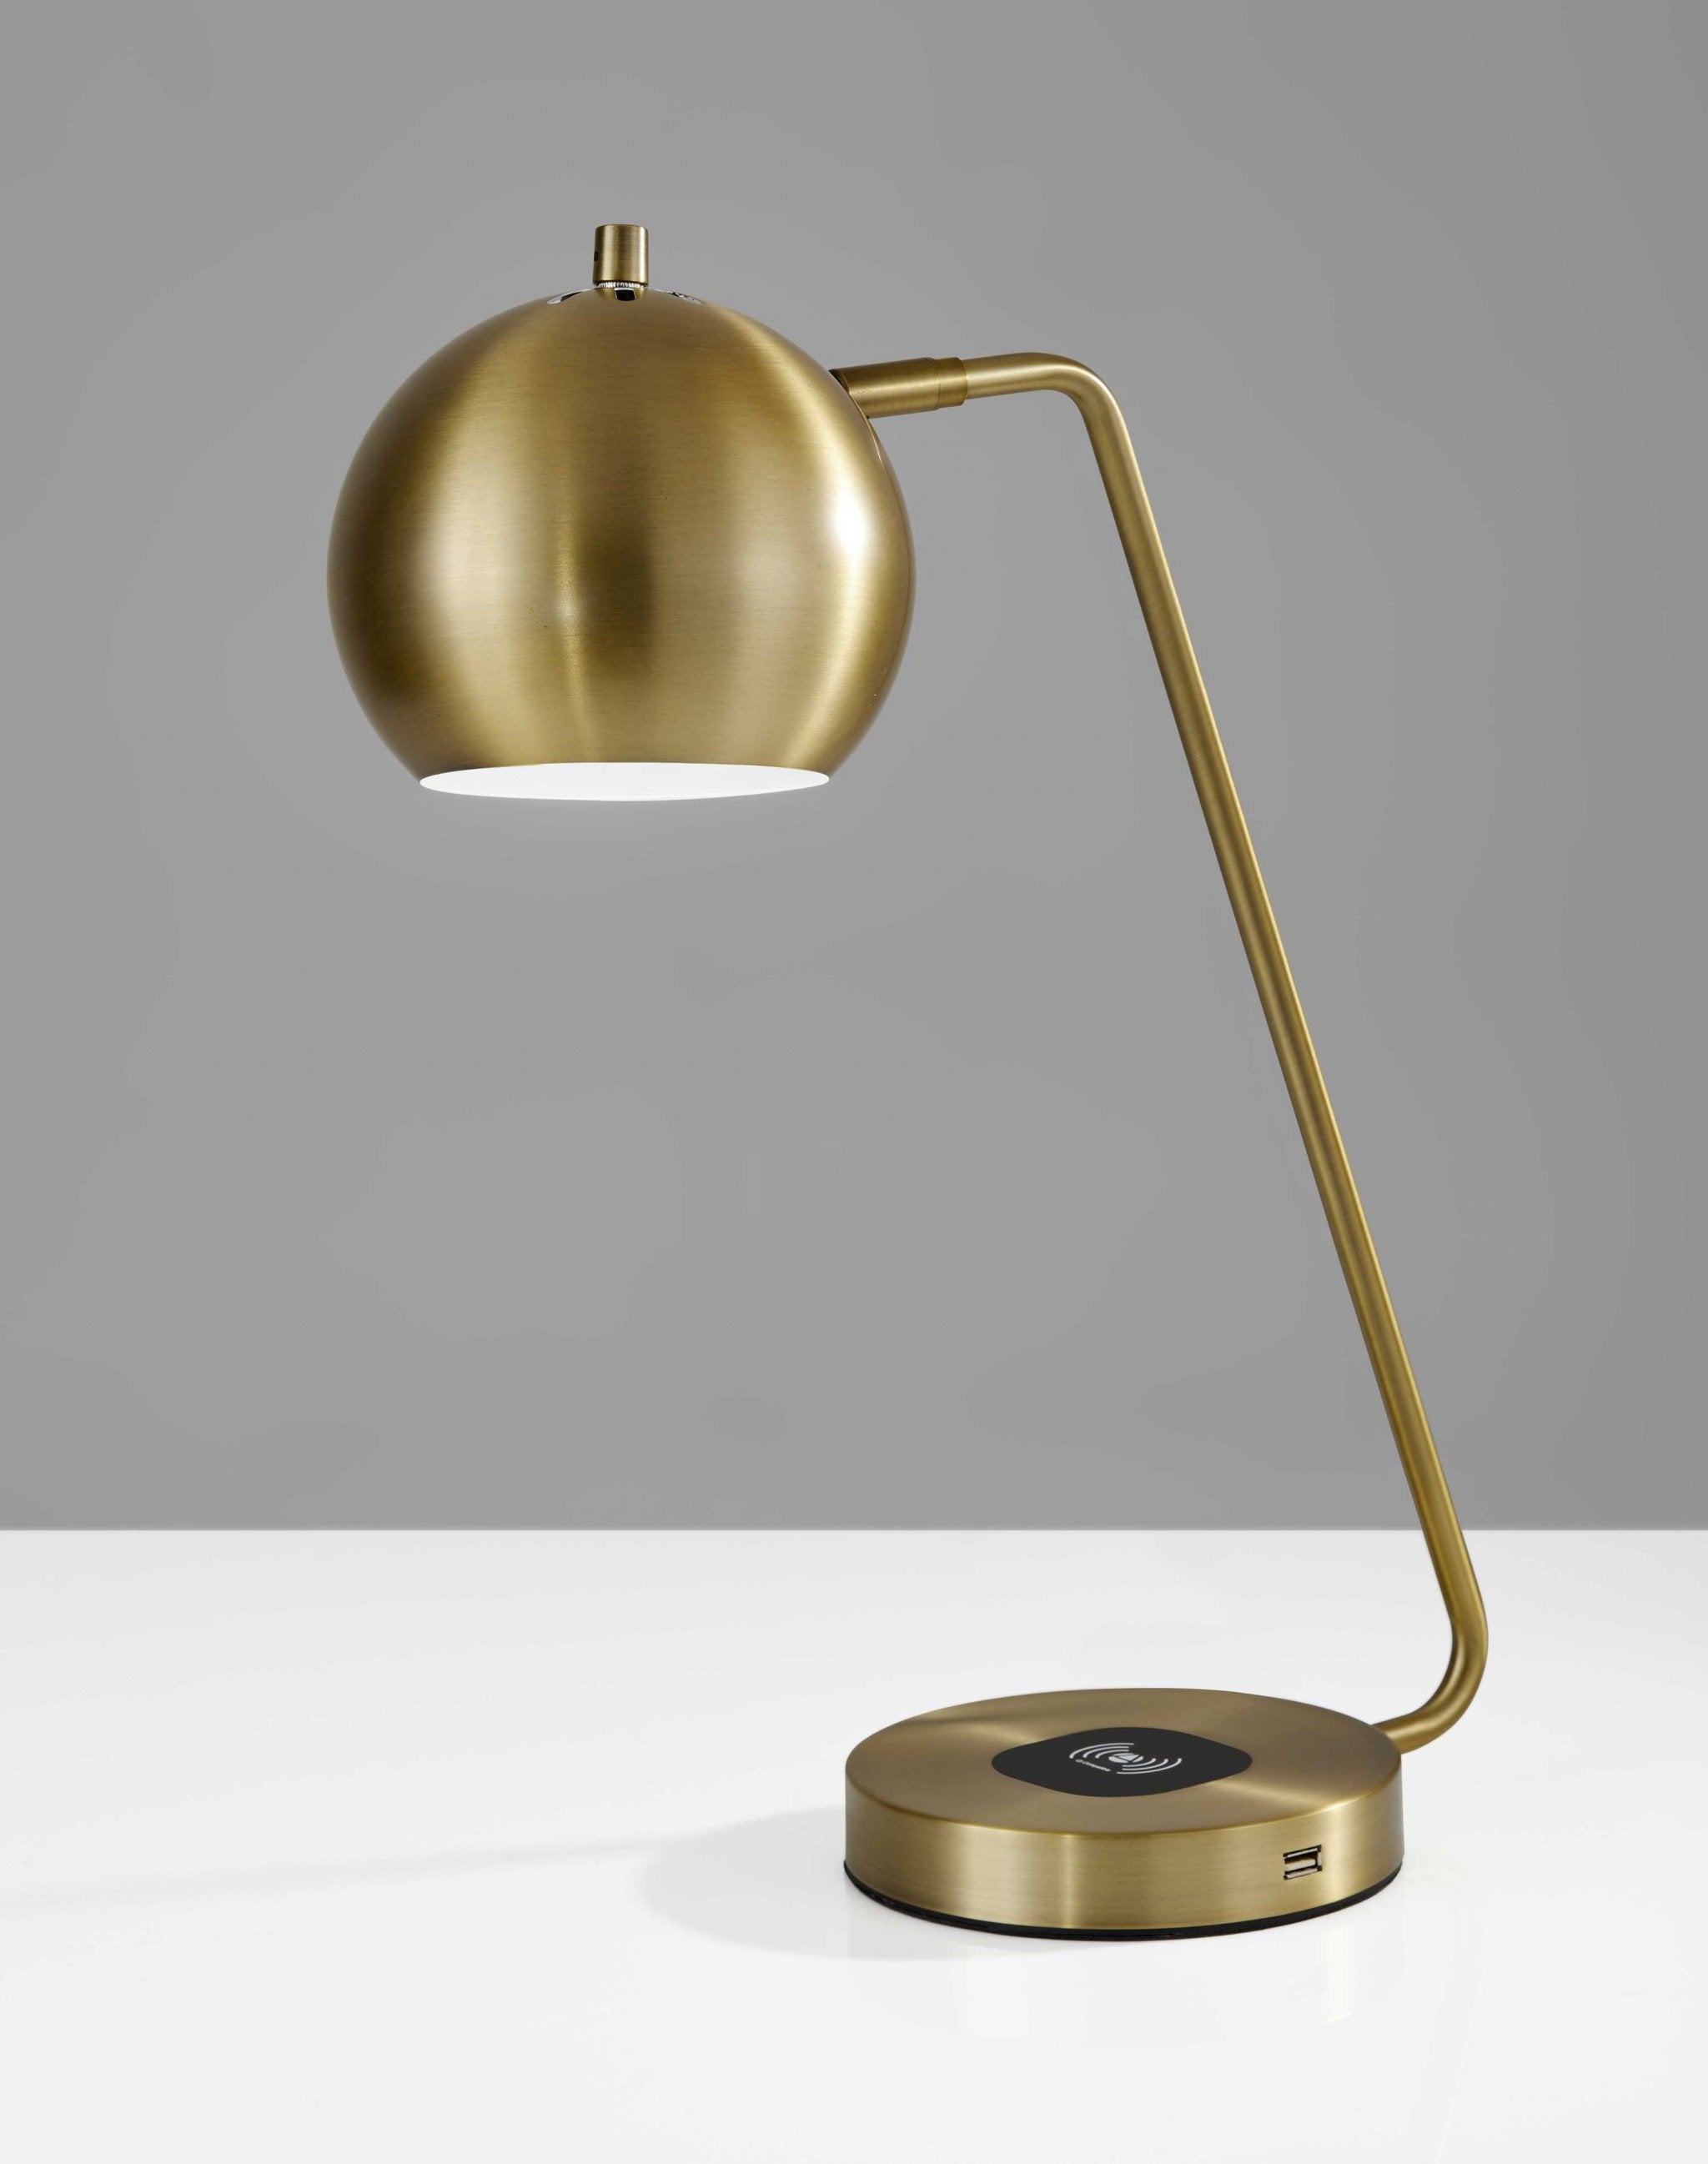 Retro Antiqued Brass Wireless Charging Station Desk Lamp